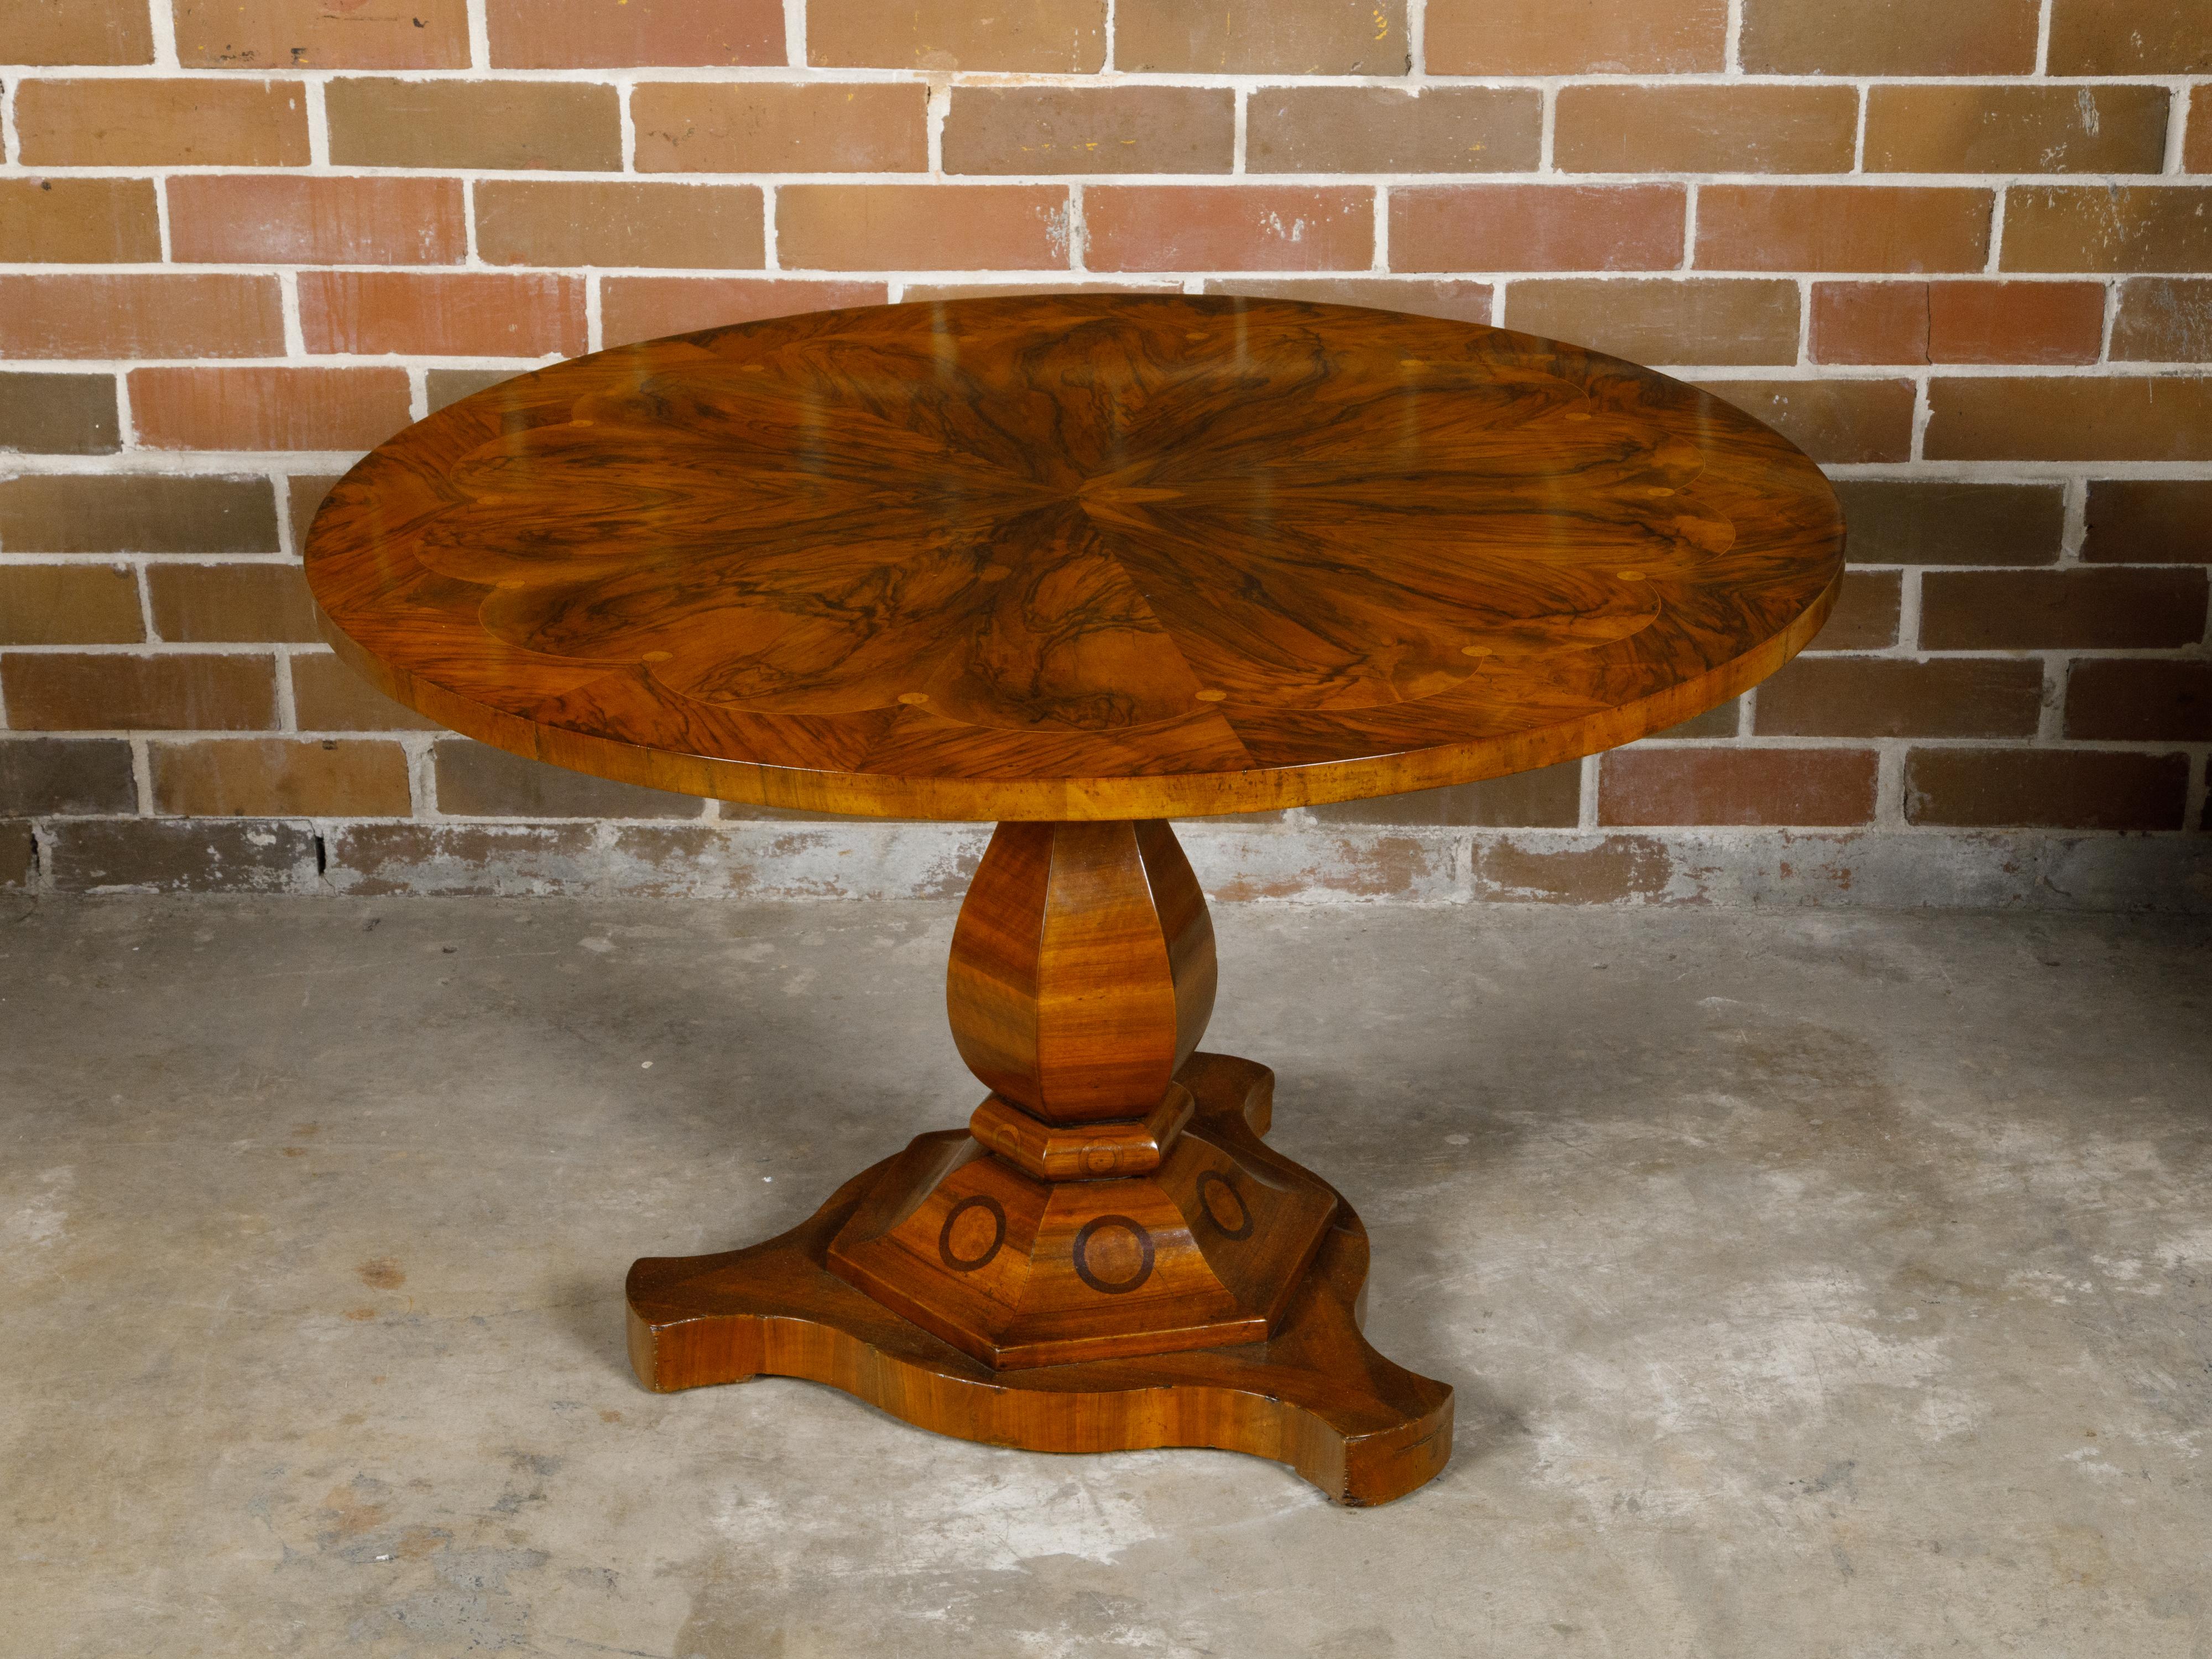 Biedermeier 19th Century Flamed Walnut Pedestal Table with Radiating Motif For Sale 6